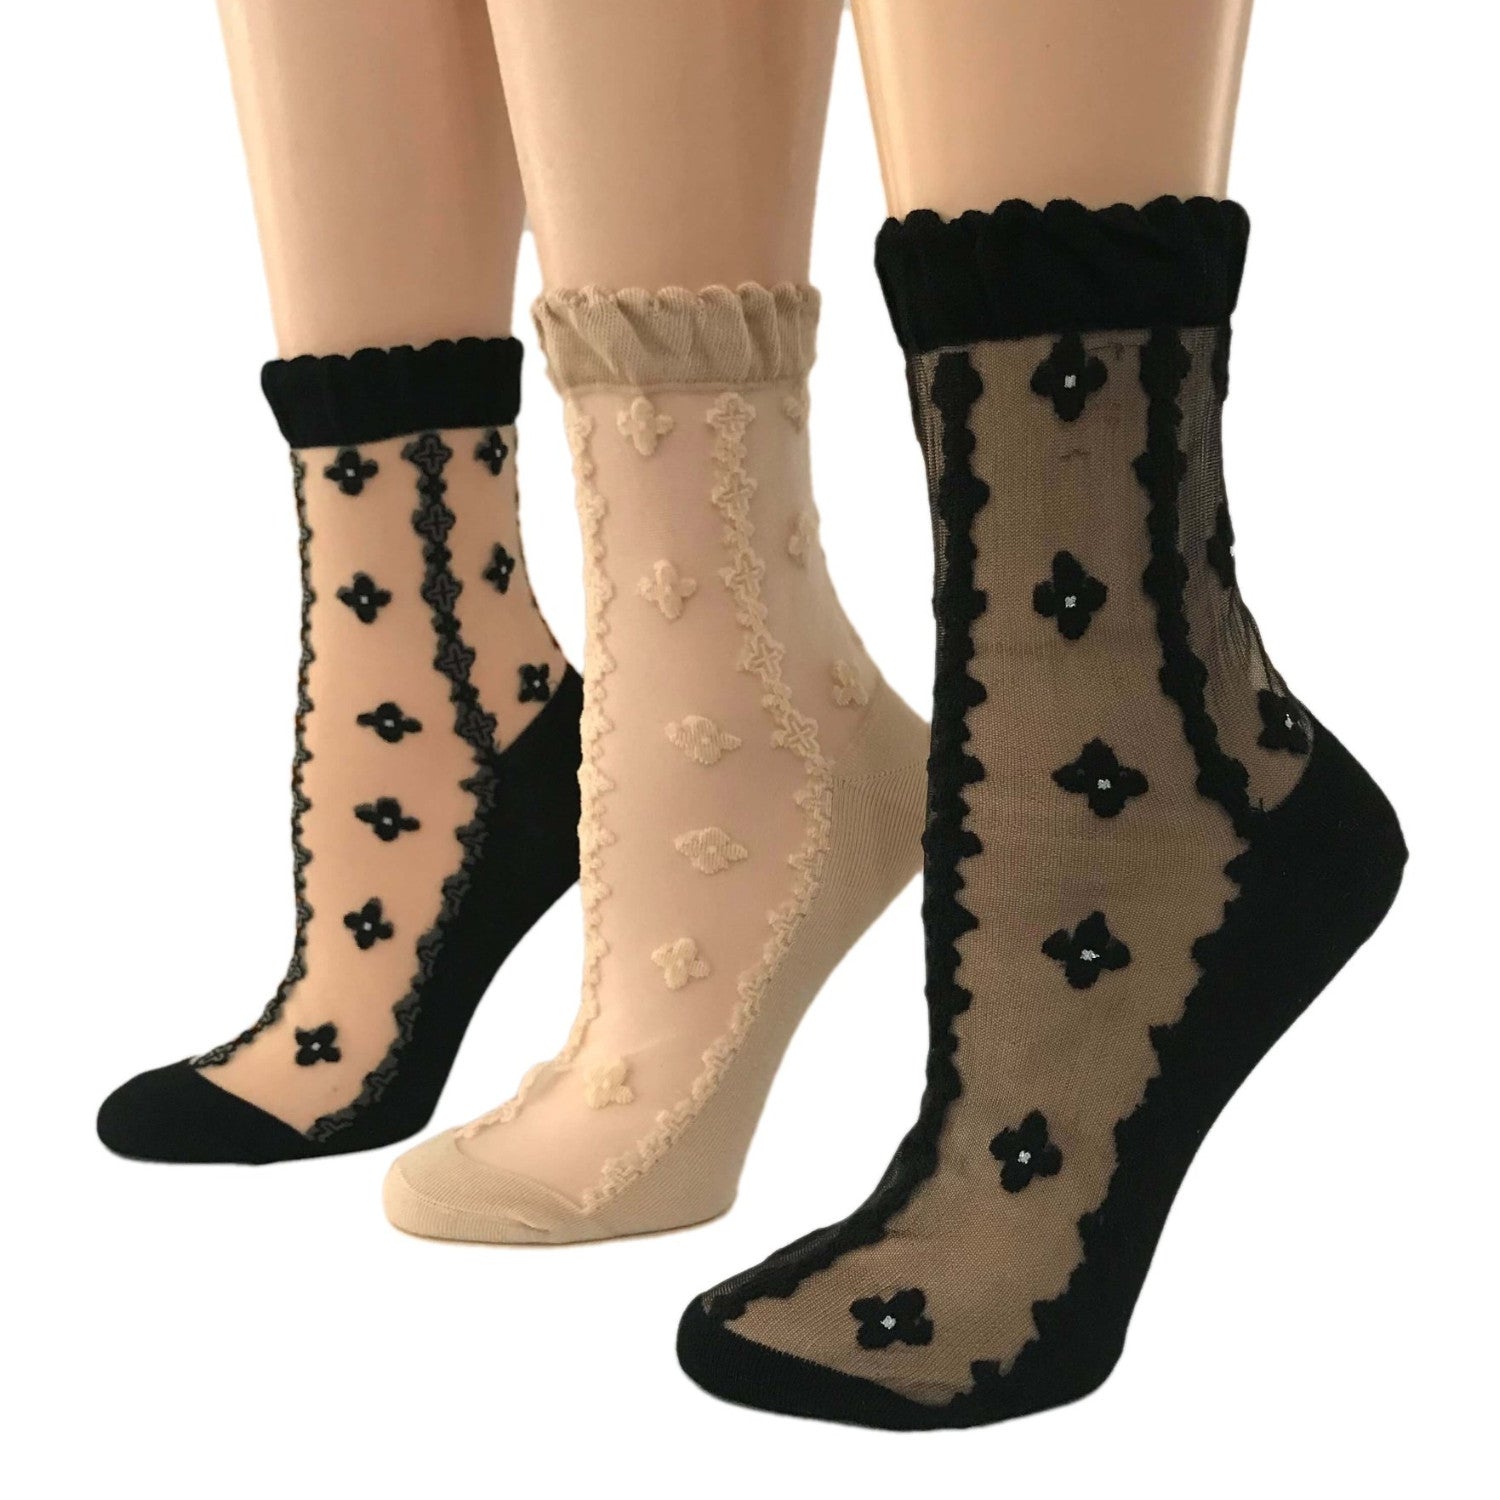 Black Diamond Patterned Sheer Socks (Pack of 3 Pairs) - Global Trendz Fashion®